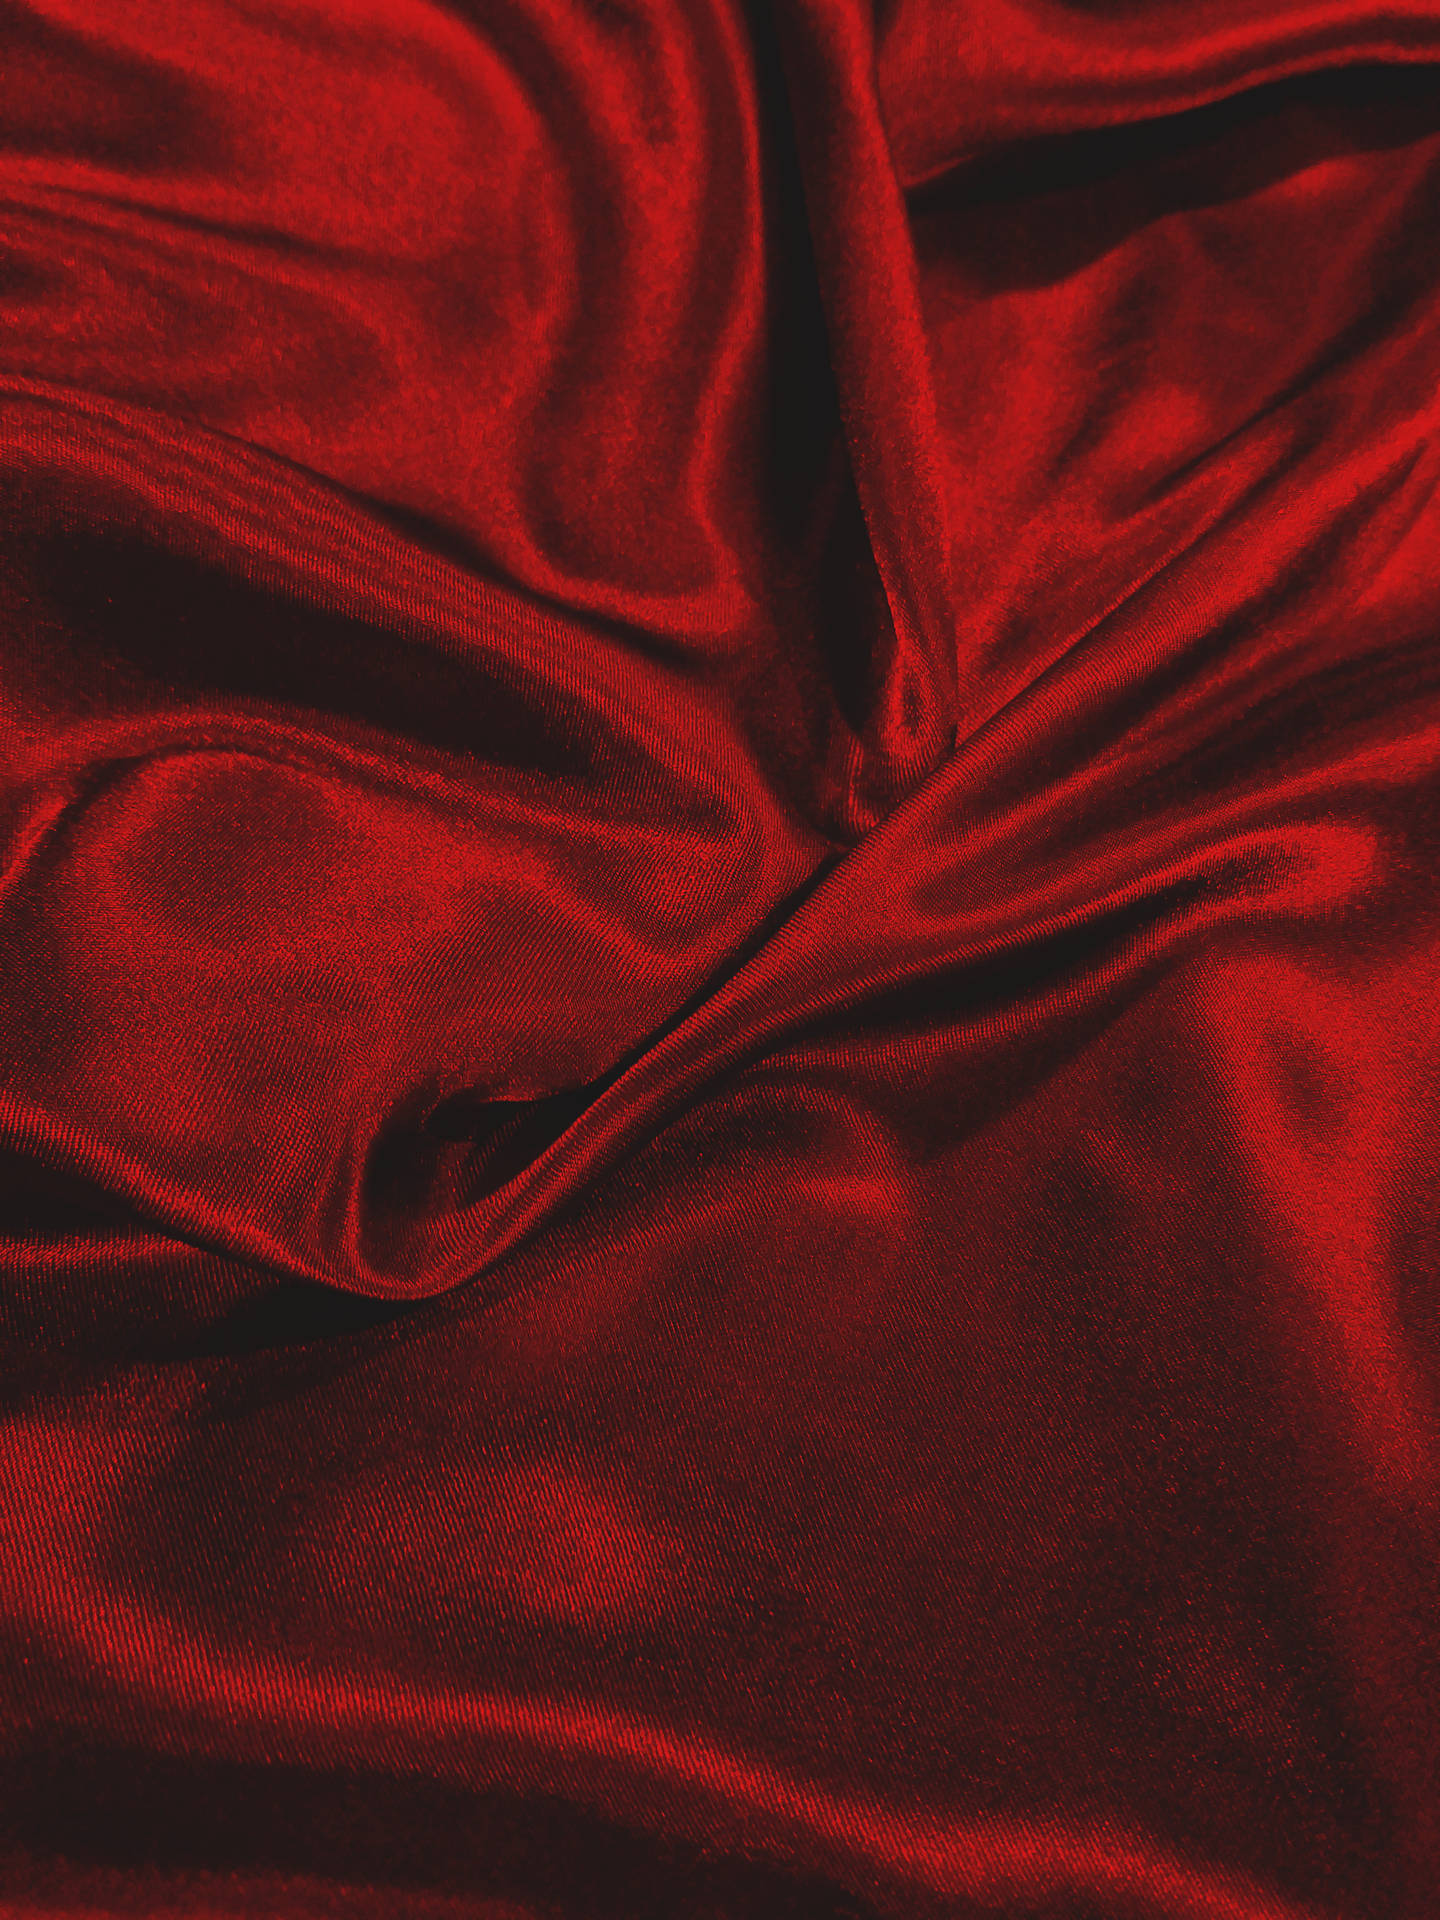 Red Soft Satin Cloth